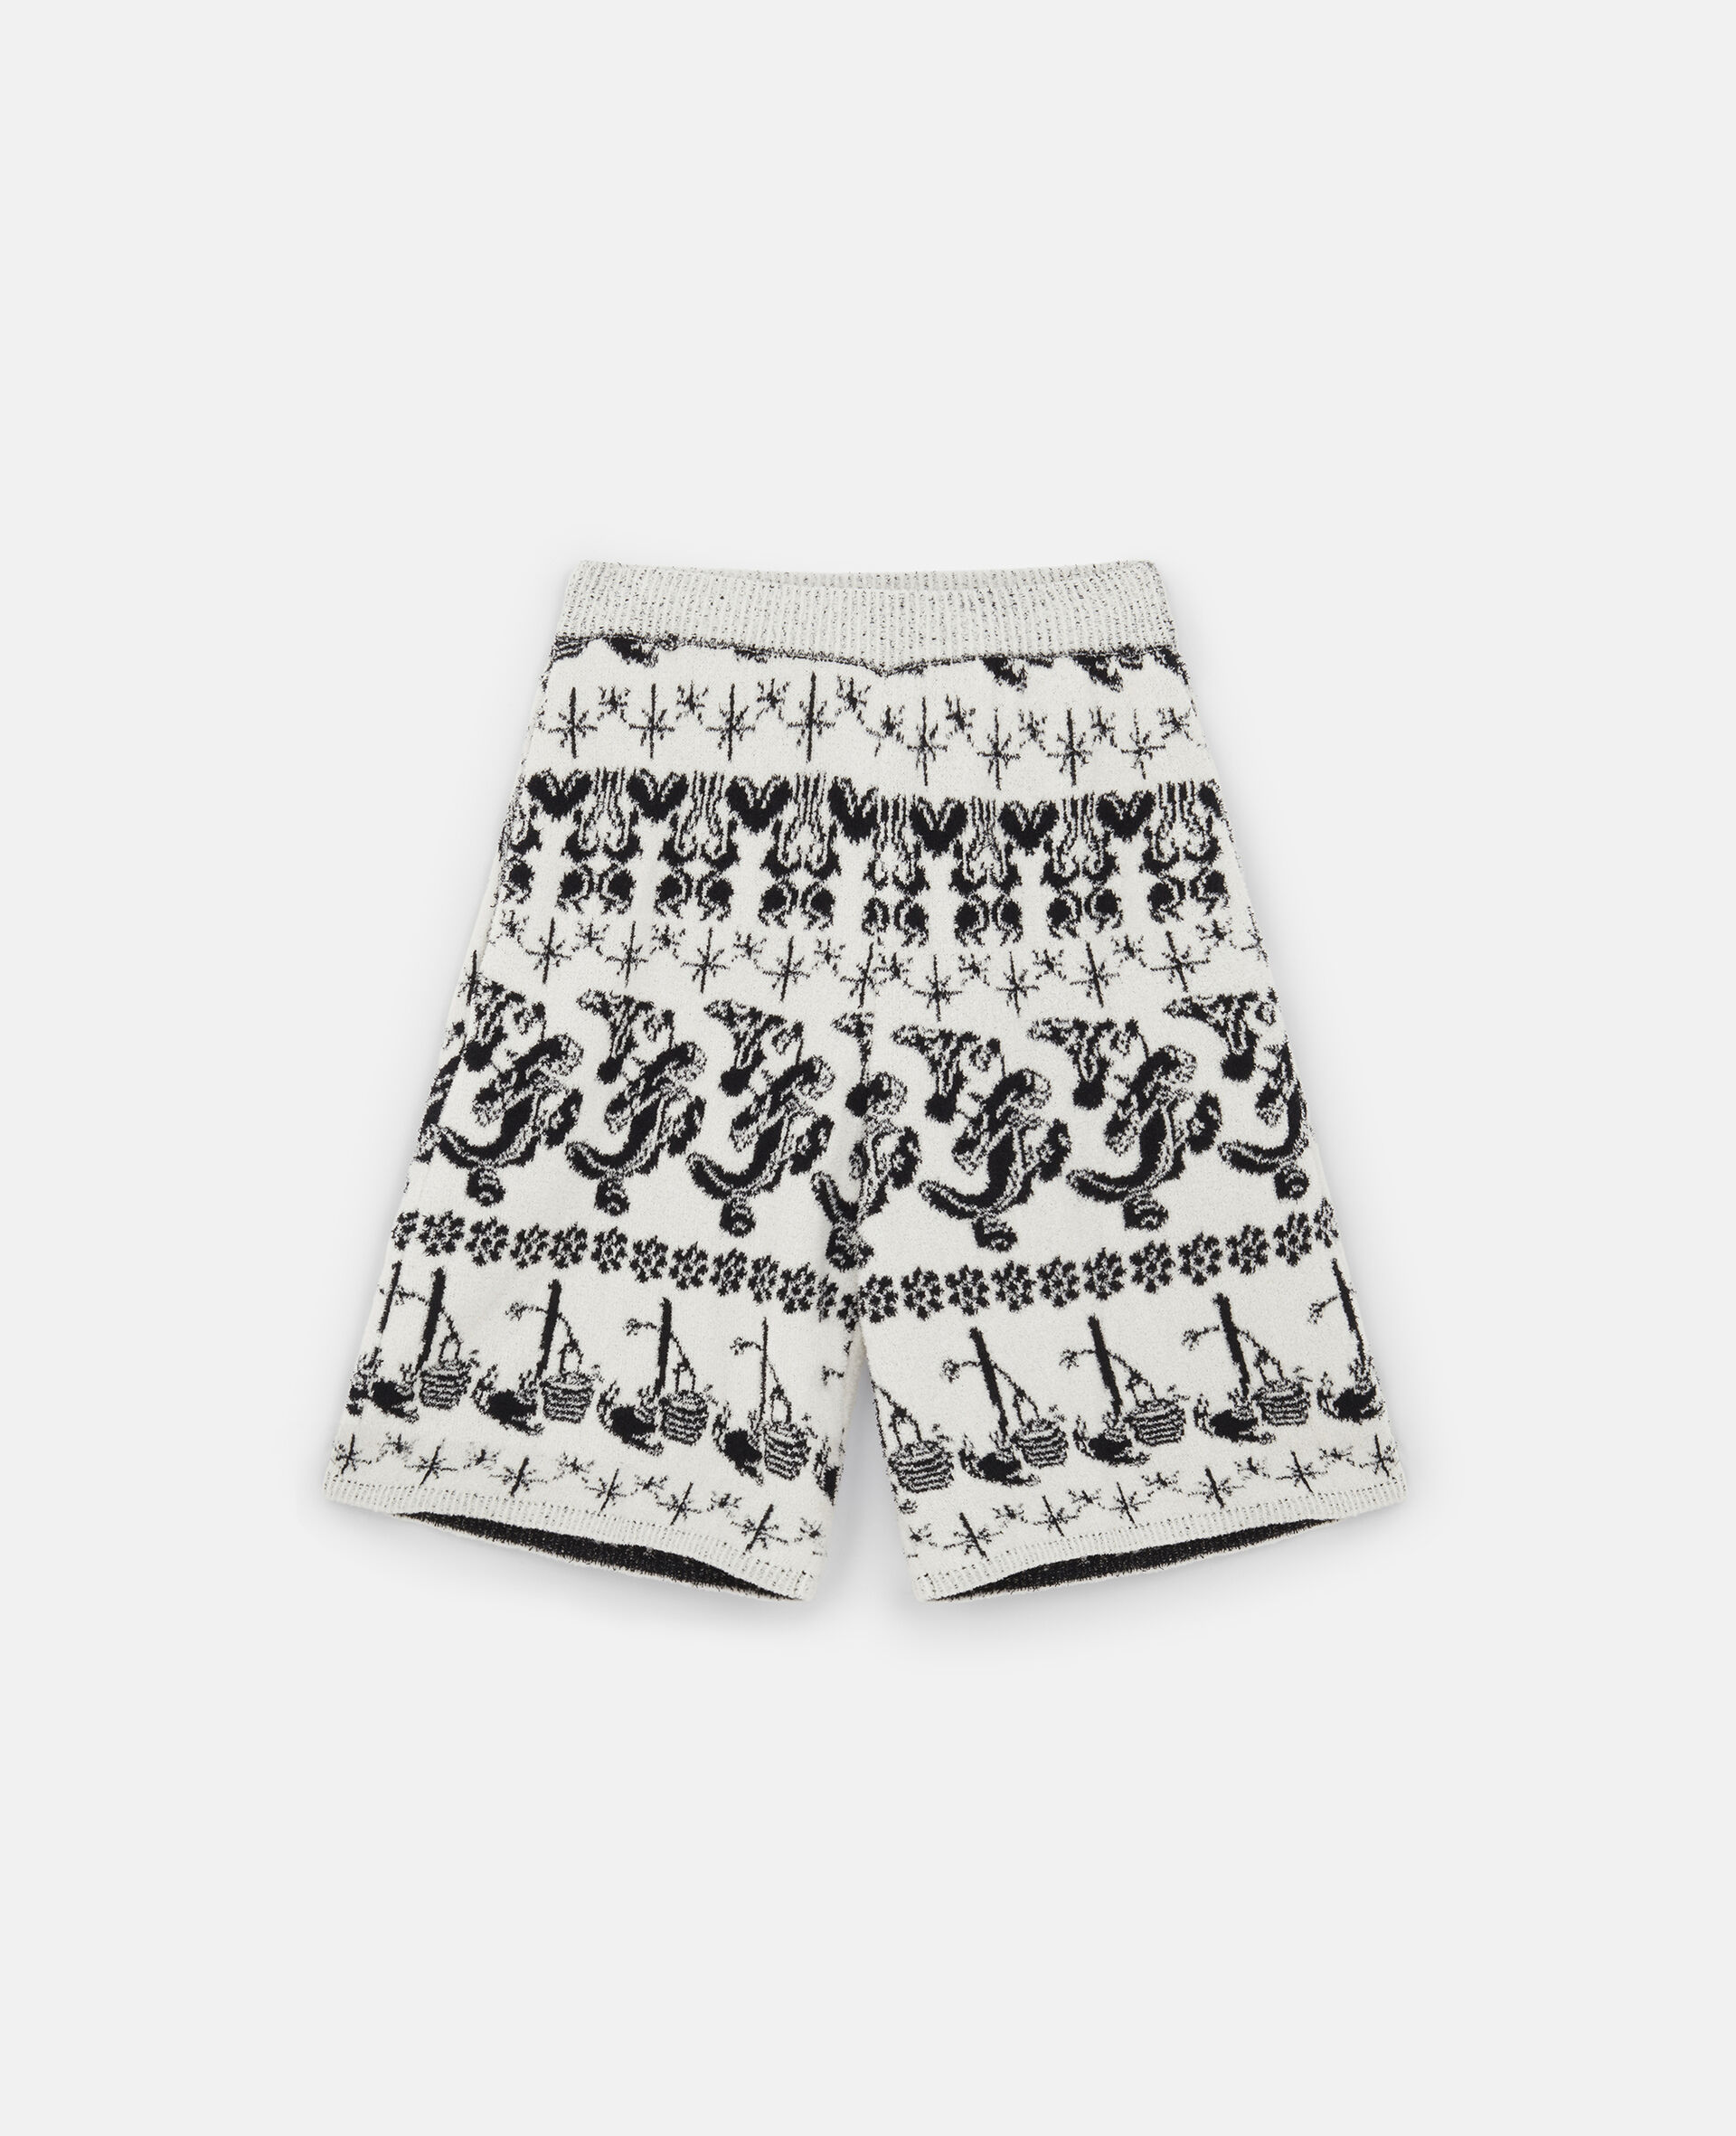 Fantasia Fair Isle Jacquard Knit Shorts-White-large